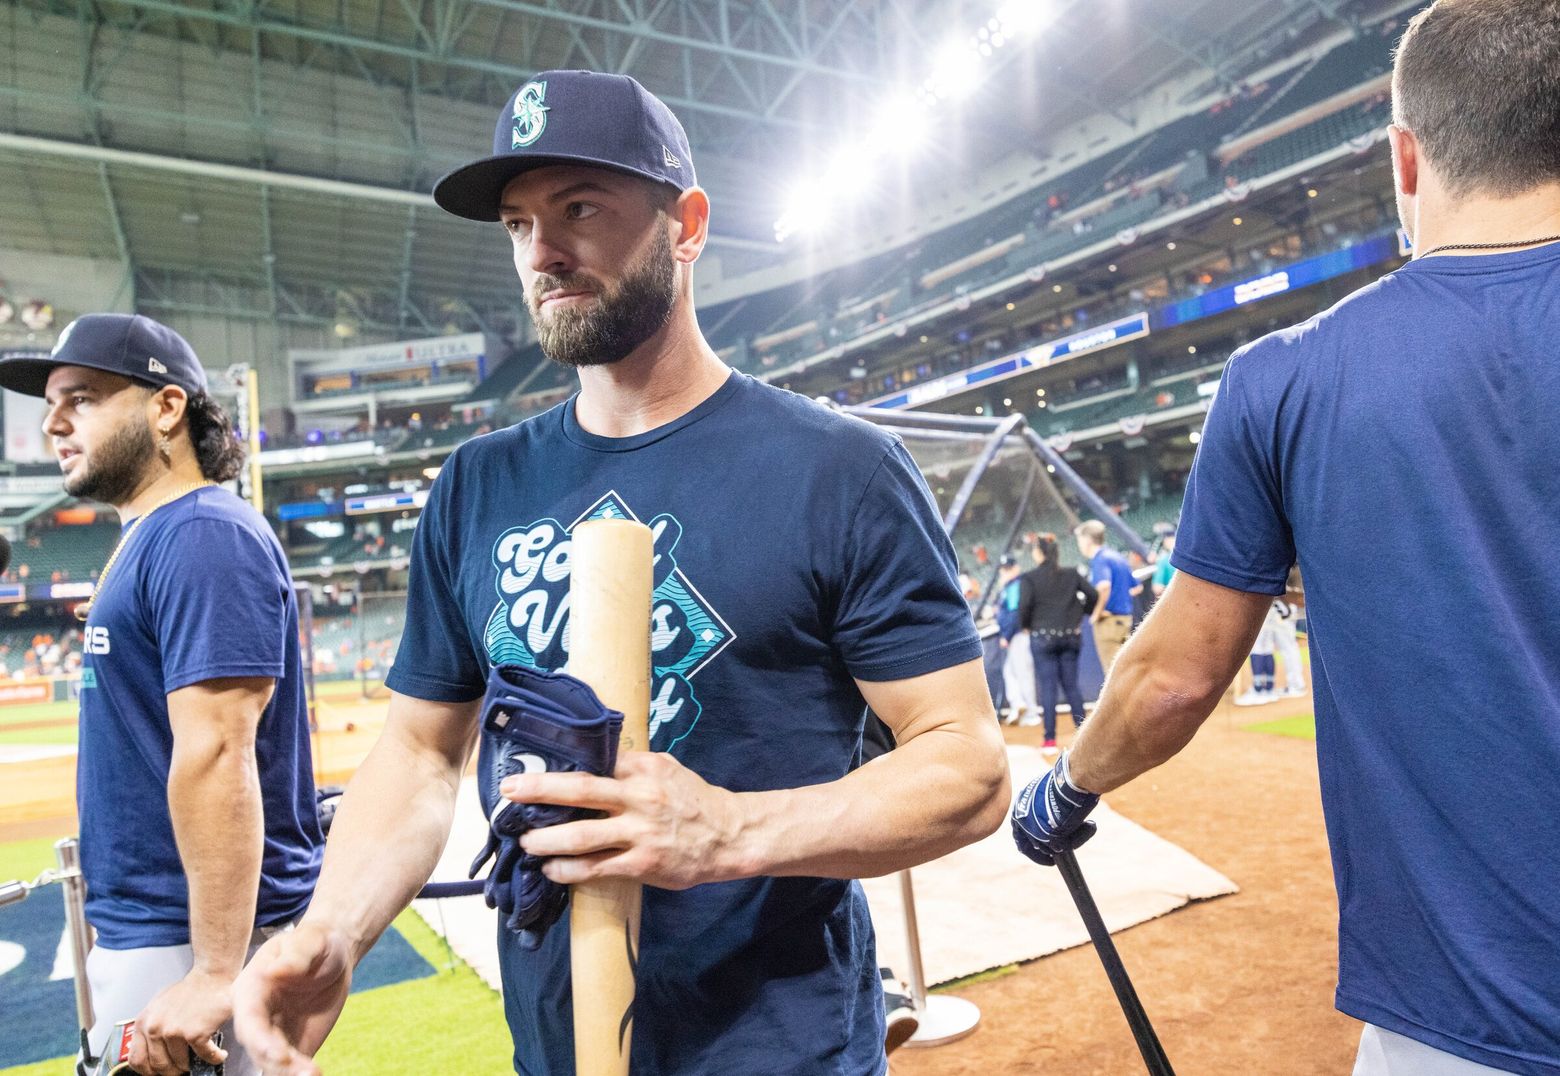 Mitch Haniger: End The Drought, Adult T-Shirt / 3XL - MLB - Sports Fan Gear | breakingt